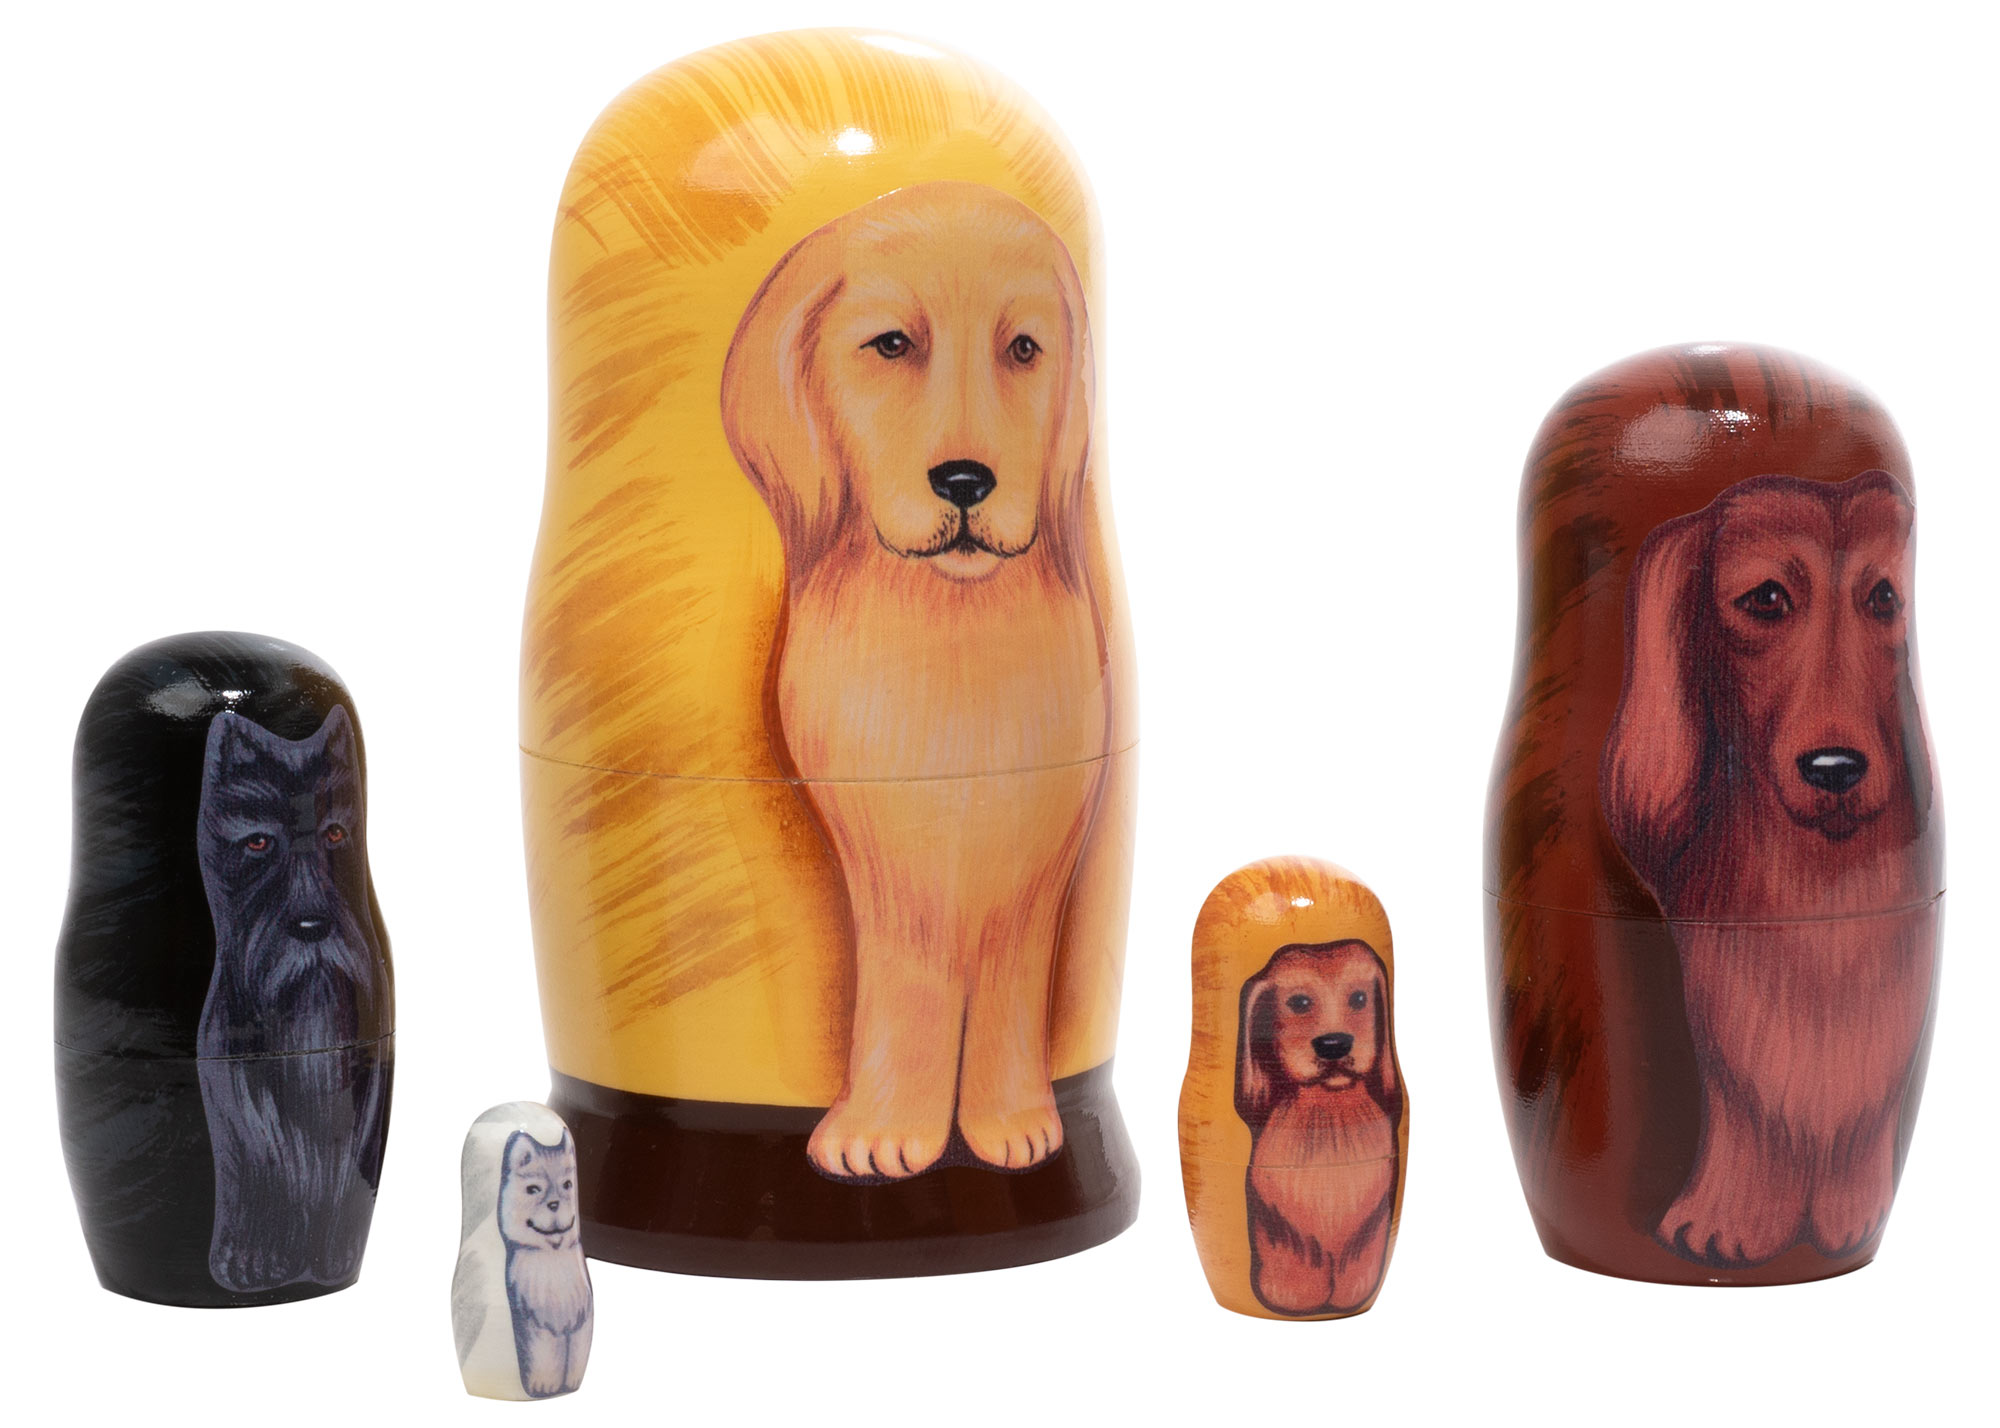 Buy Golden Retriever Dog Nesting Doll 5pc./4" at GoldenCockerel.com